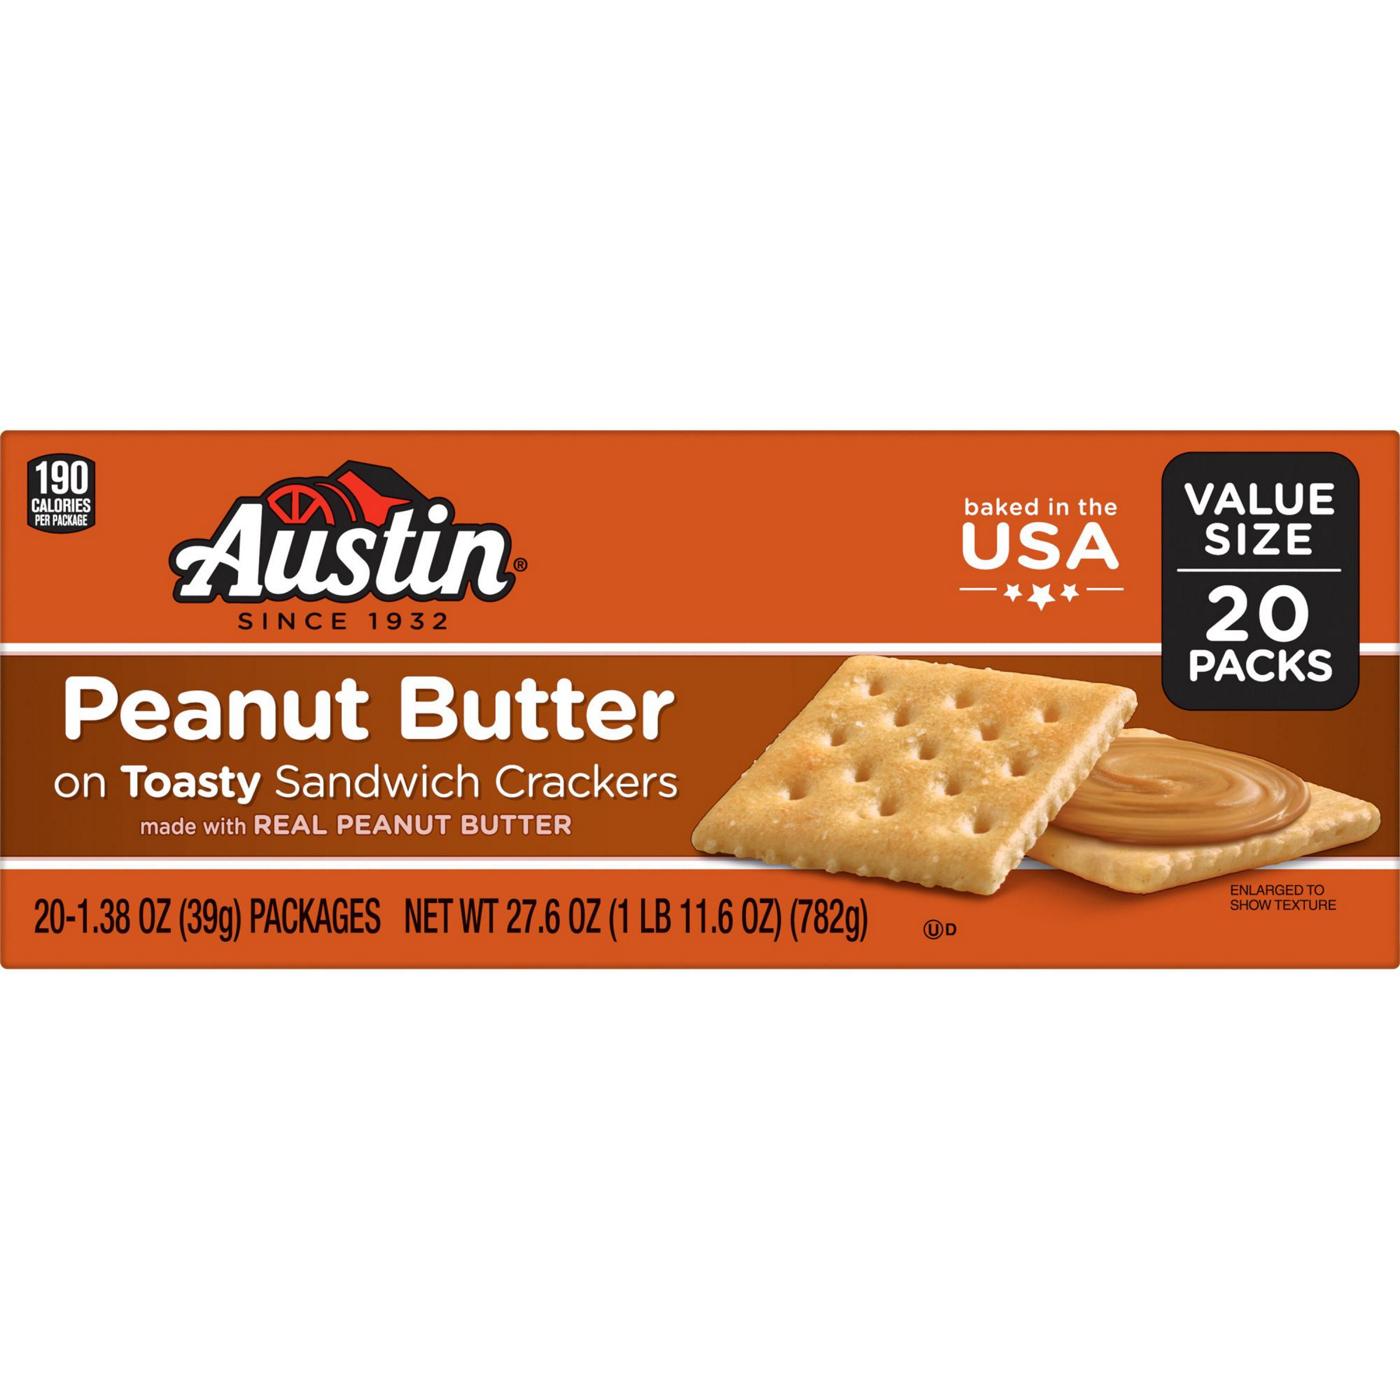 Austin Peanut Butter on Toasty Sandwich Crackers; image 1 of 3